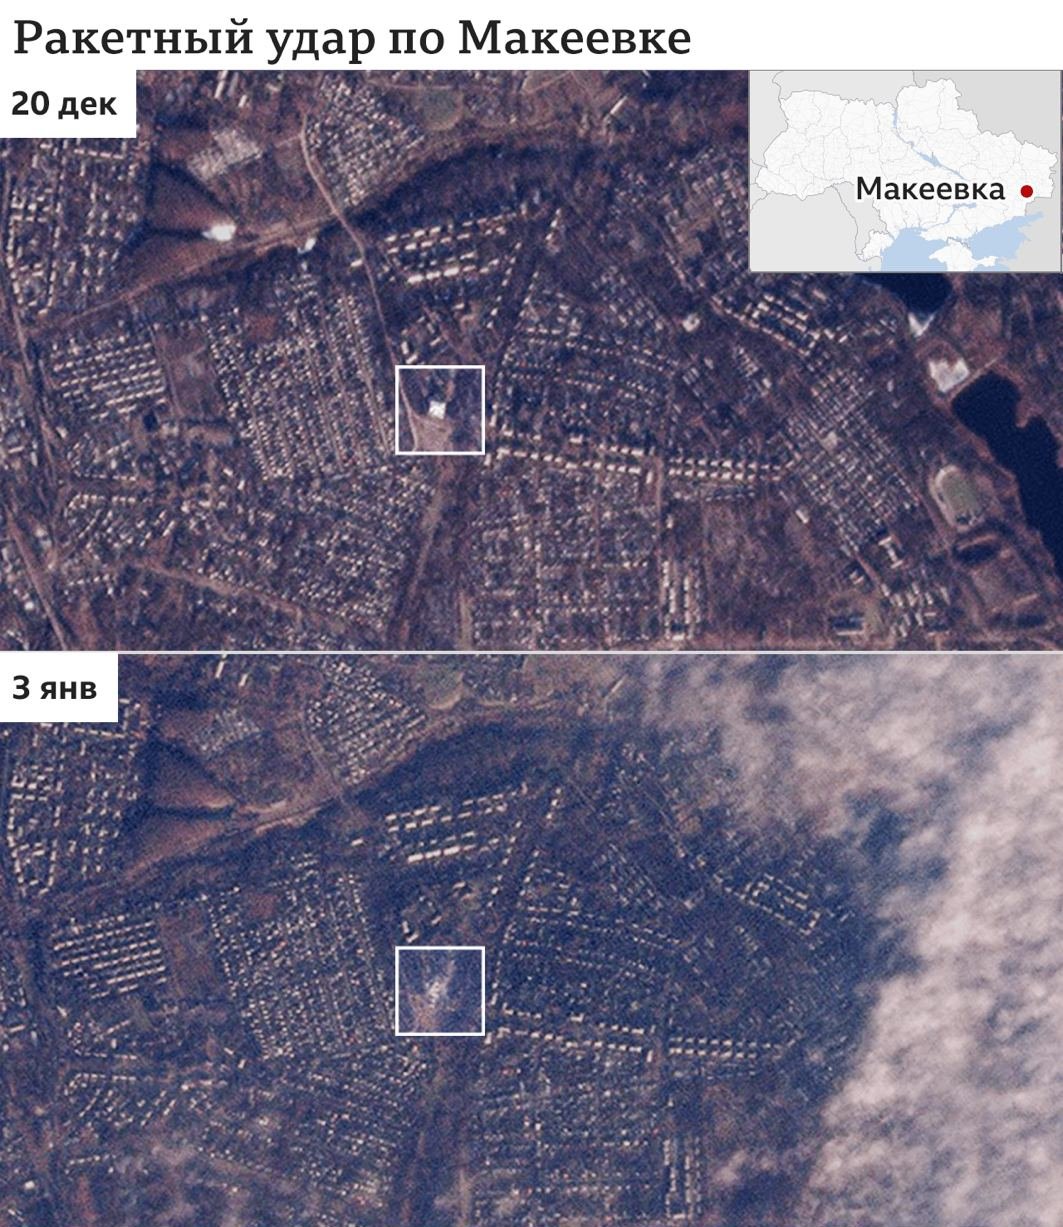 Cпутниковое фото Макеевки до и после ракетного удара ВСУ. Фото:  Telegram